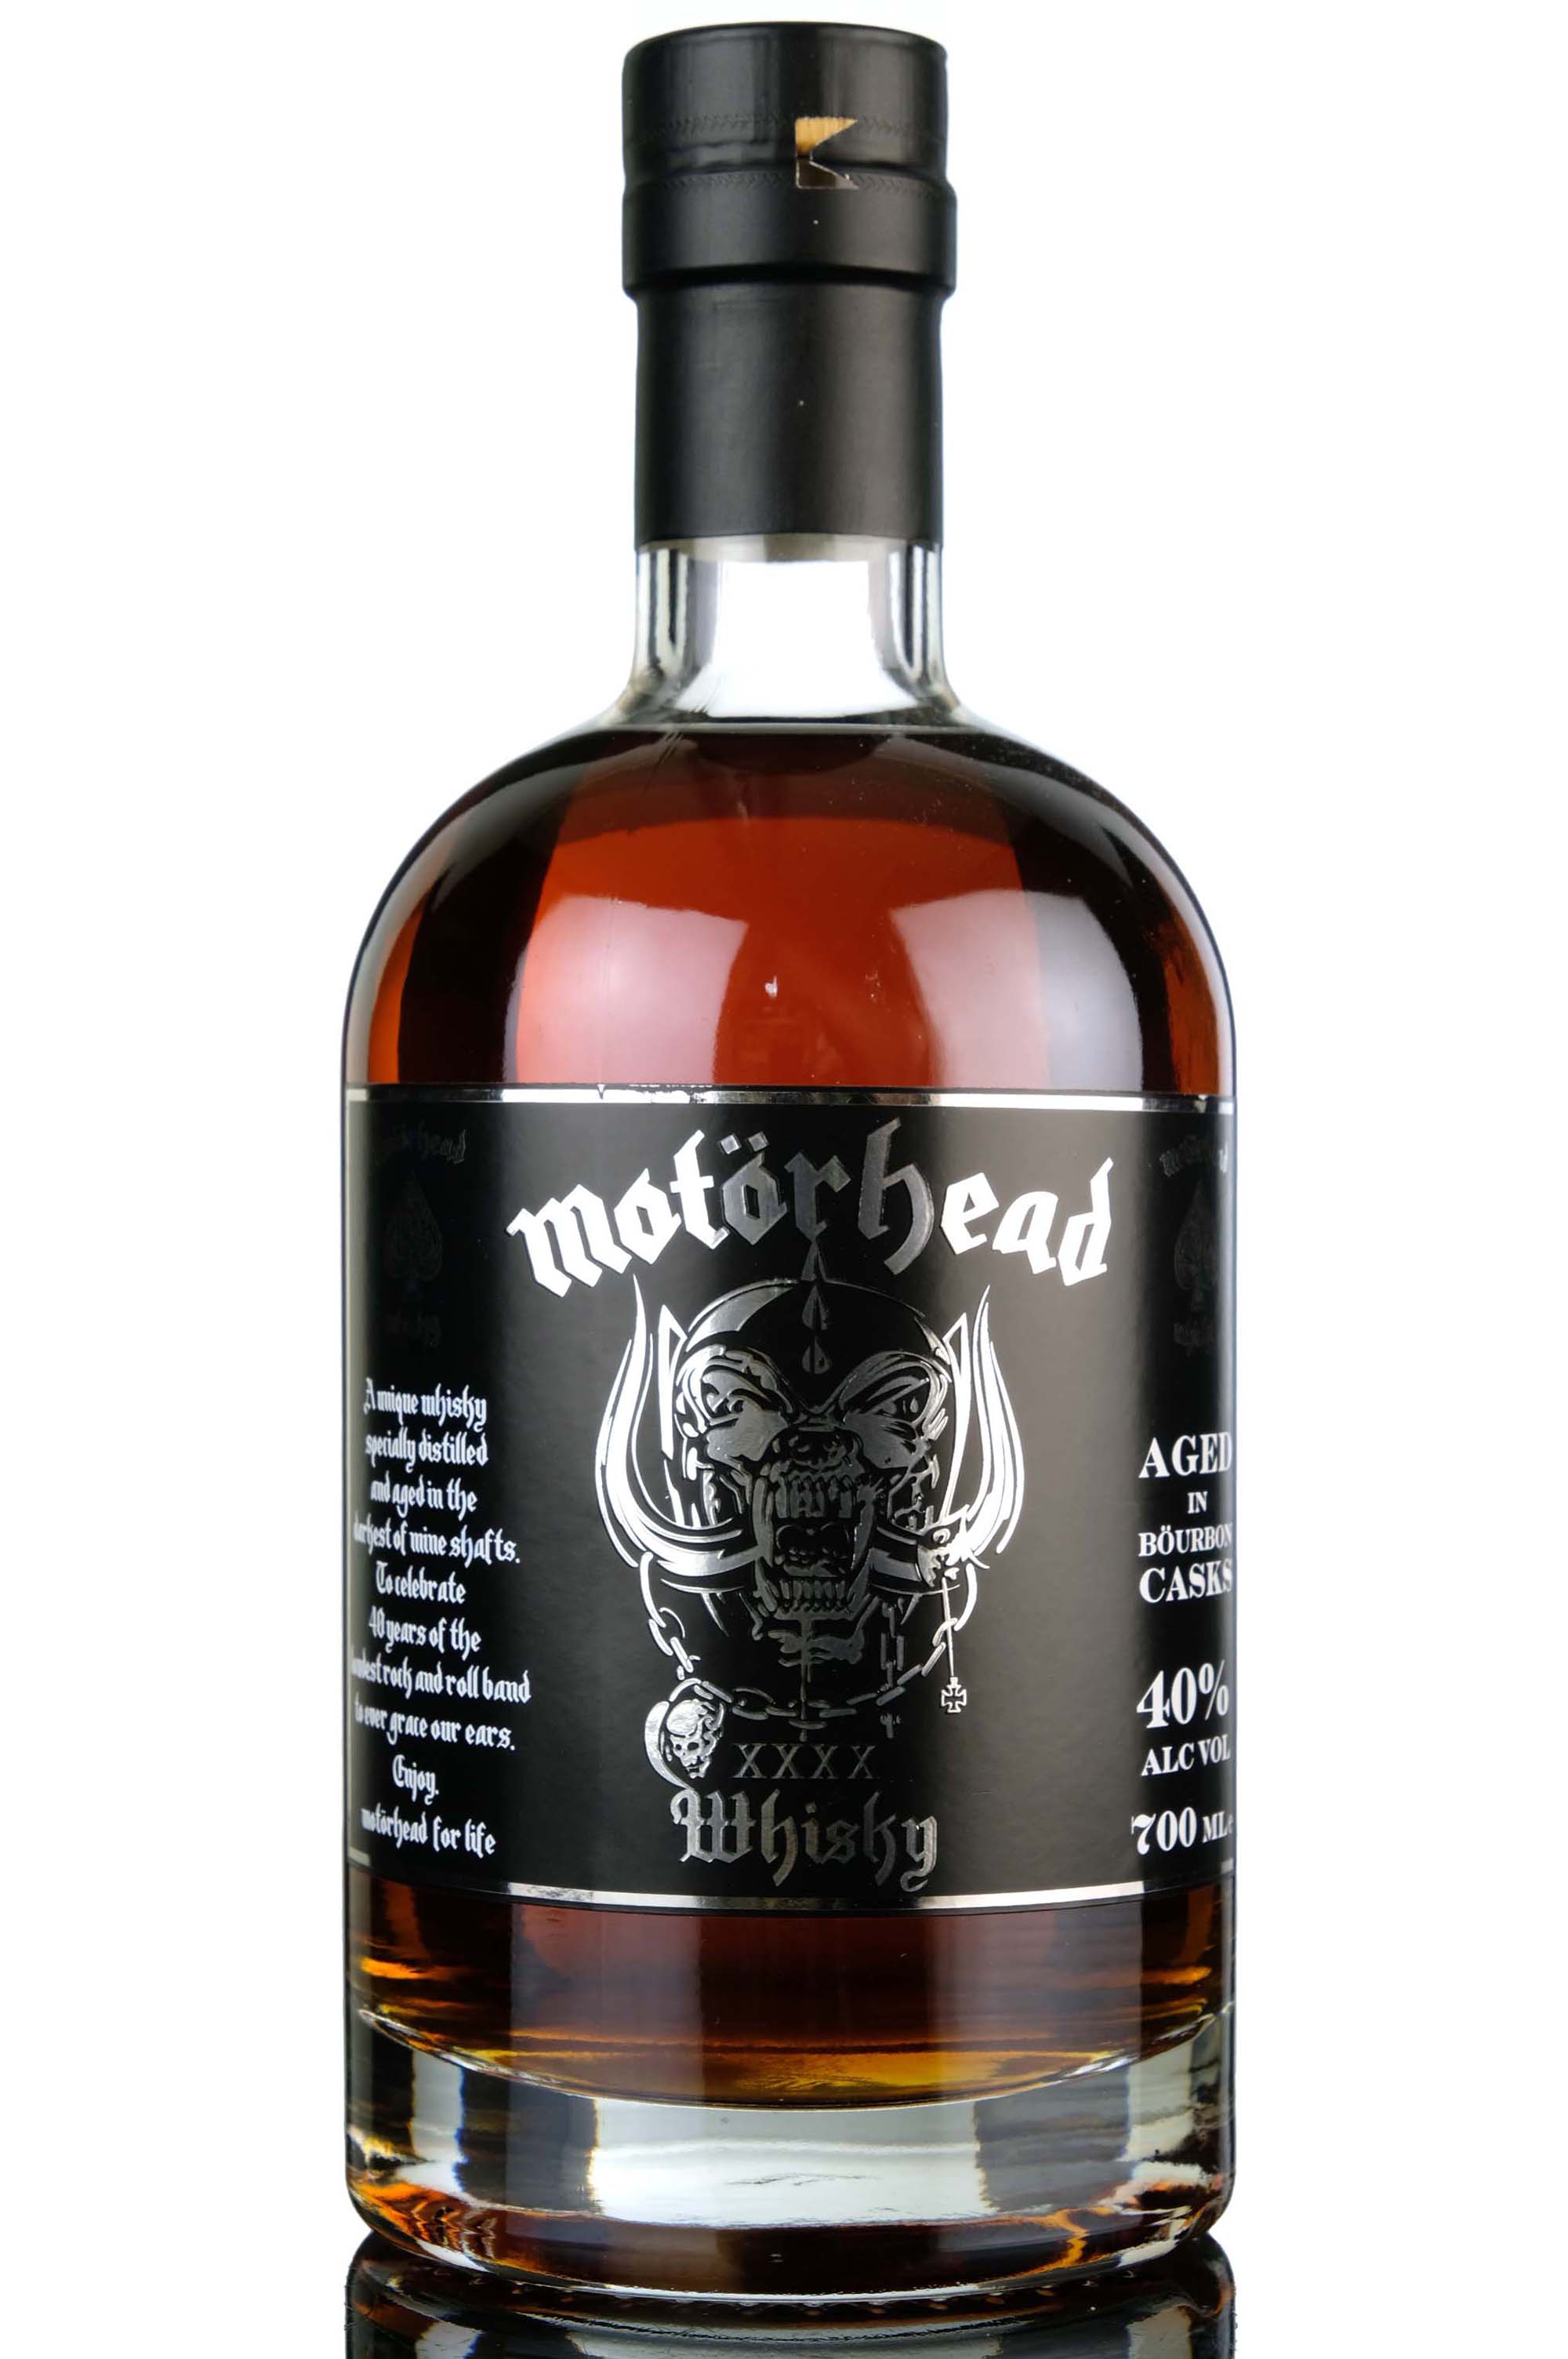 Mackmyra Motorhead XXXX - Batch 1 - 2015 Release